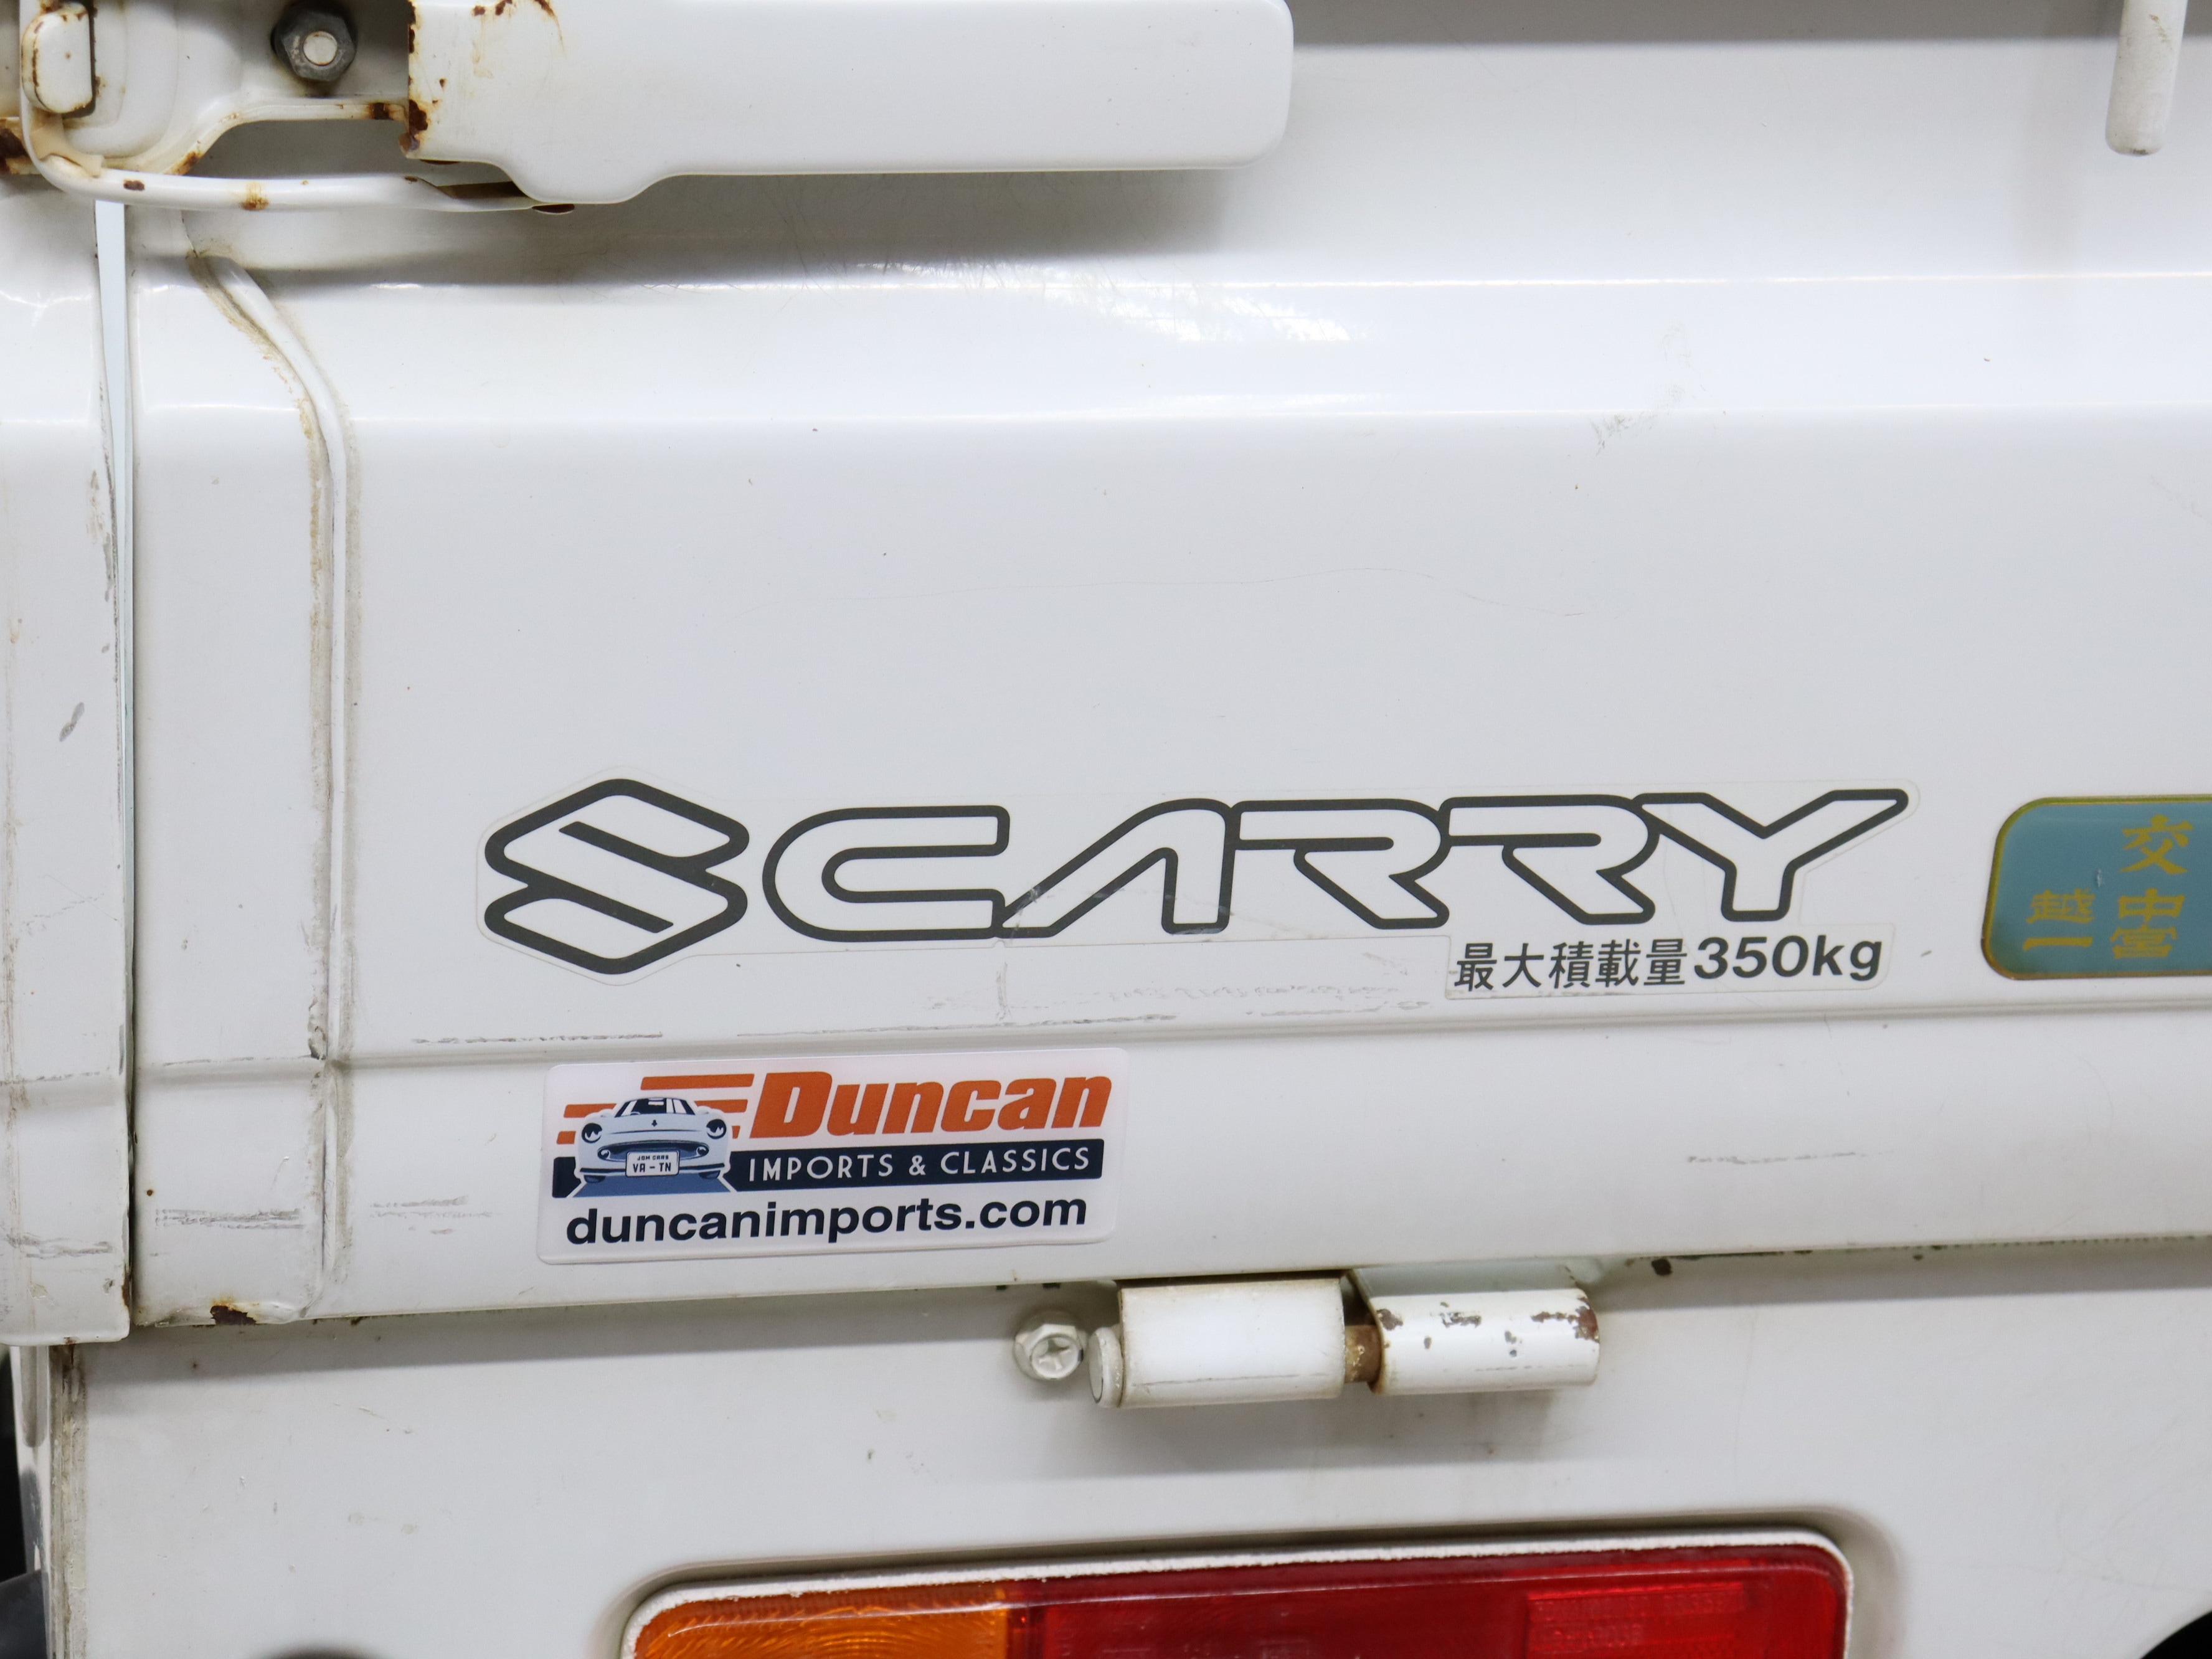 1996 Suzuki Carry 39